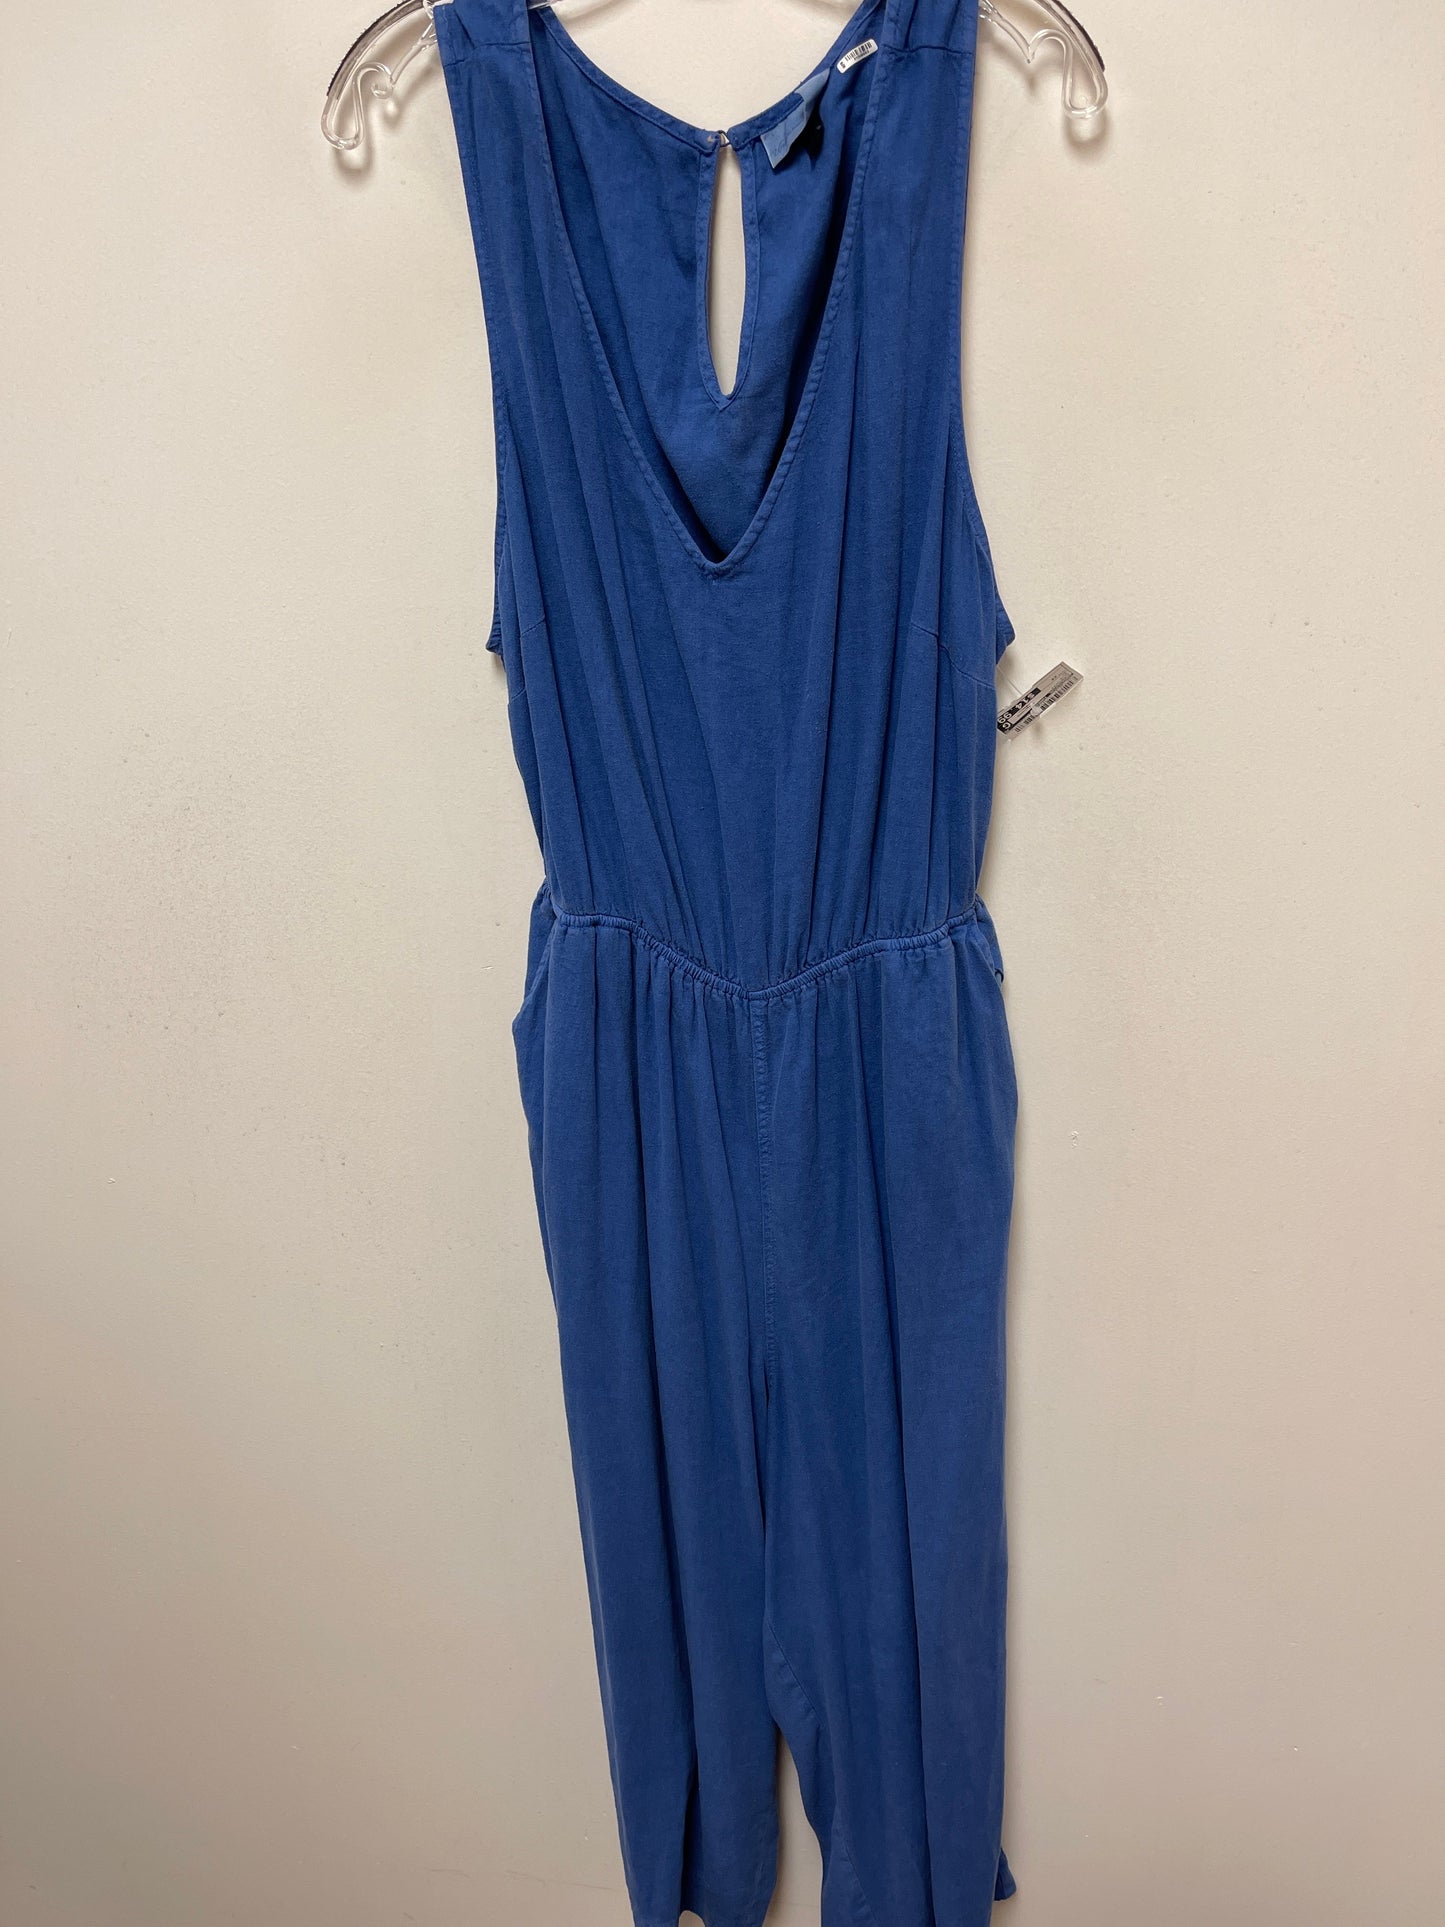 Blue Jumpsuit Universal Thread, Size 2x